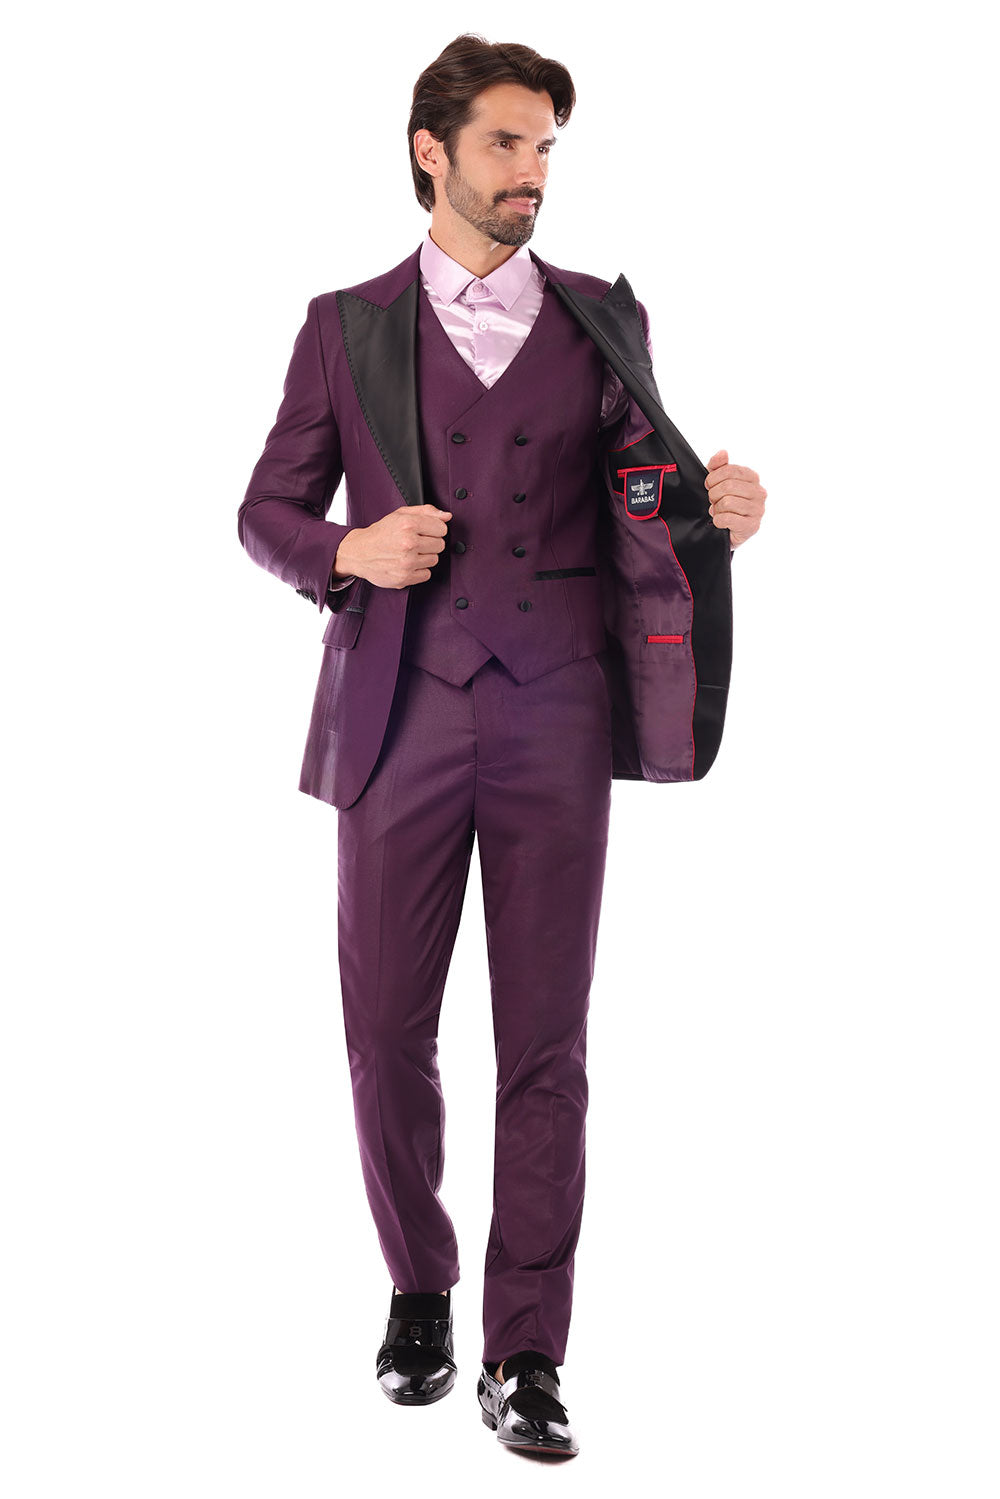 Barabas Men's Solid Color Peak Satin Lapel Suit Set 4SU13 Purple